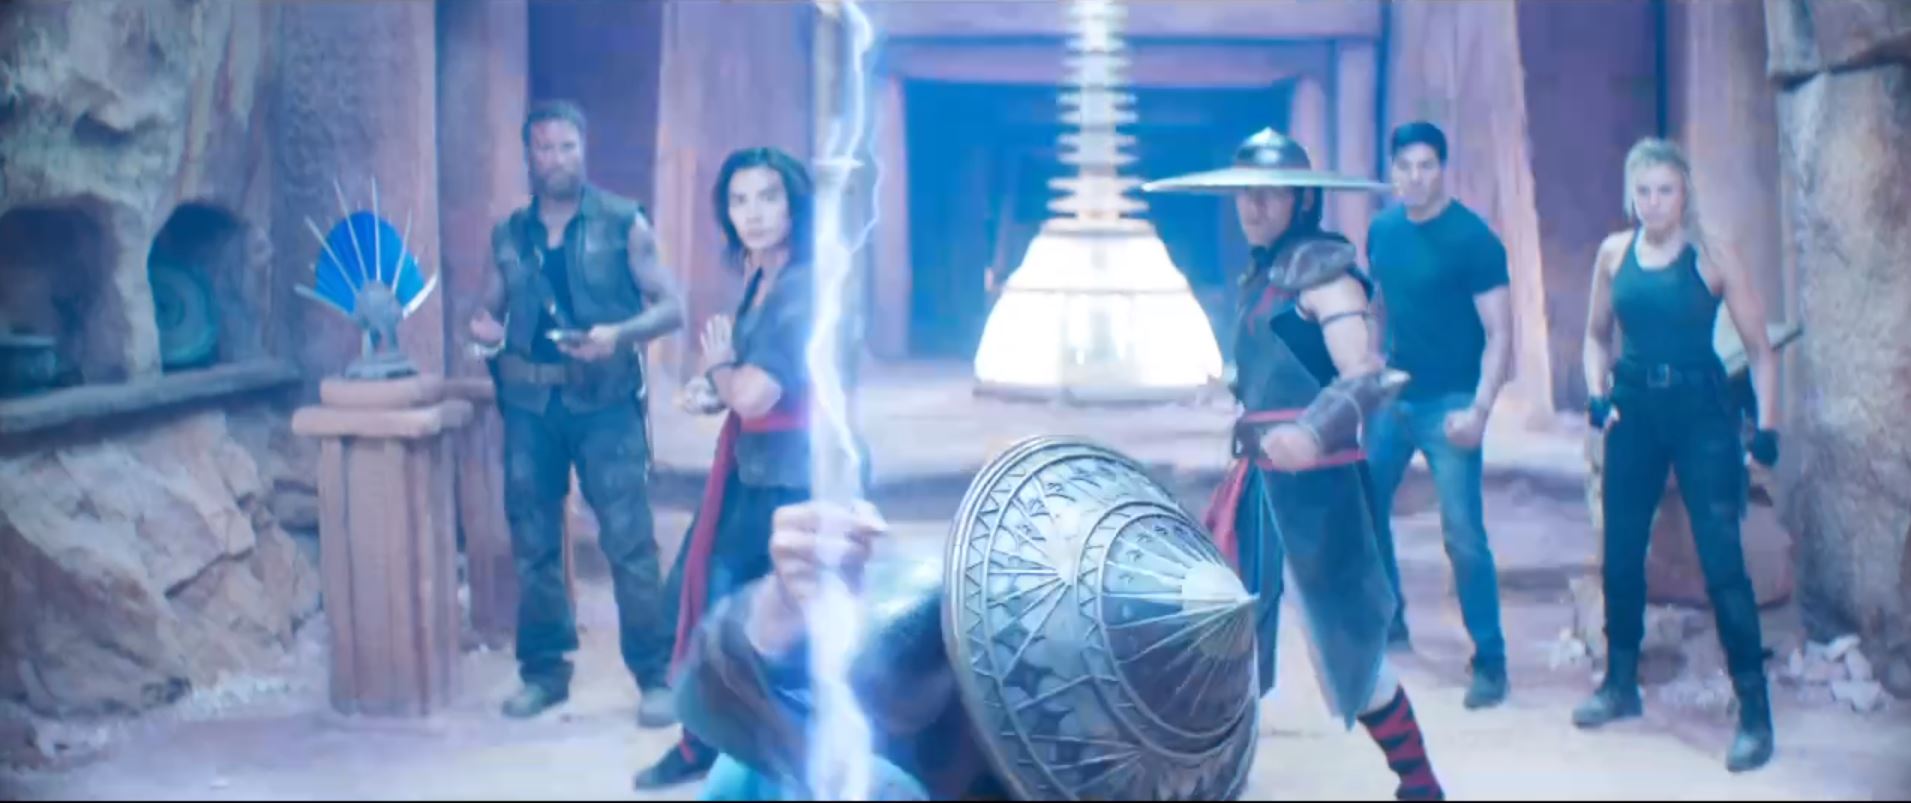 Why Shang Tsung From Mortal Kombat 2021 Looks So Familiar